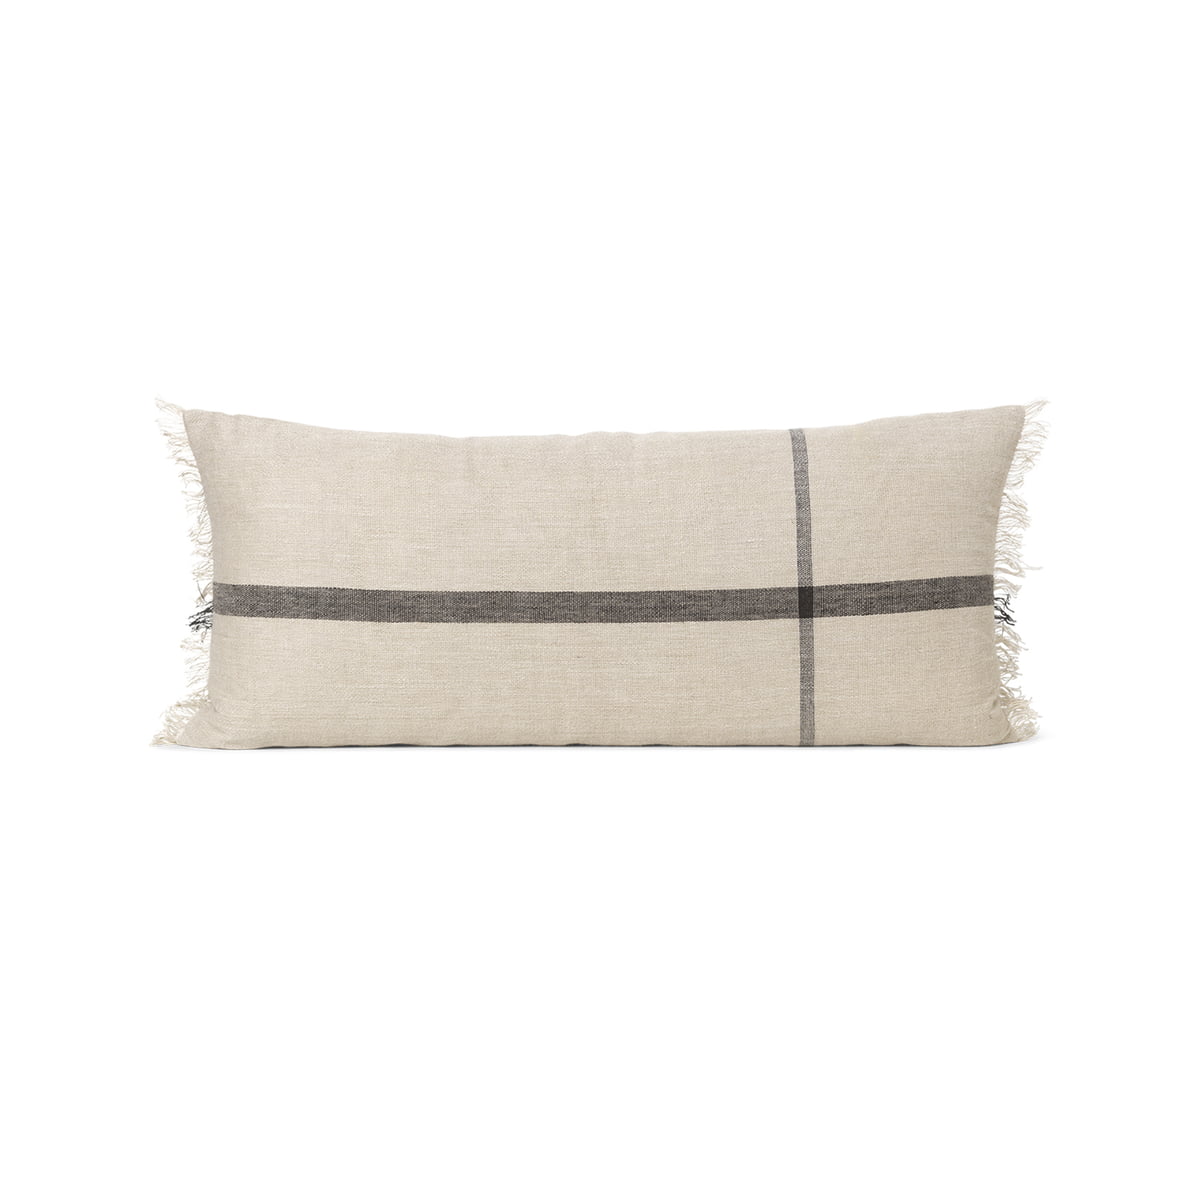 ferm Living - Calm cushion, 40 x 90 cm, camel / black